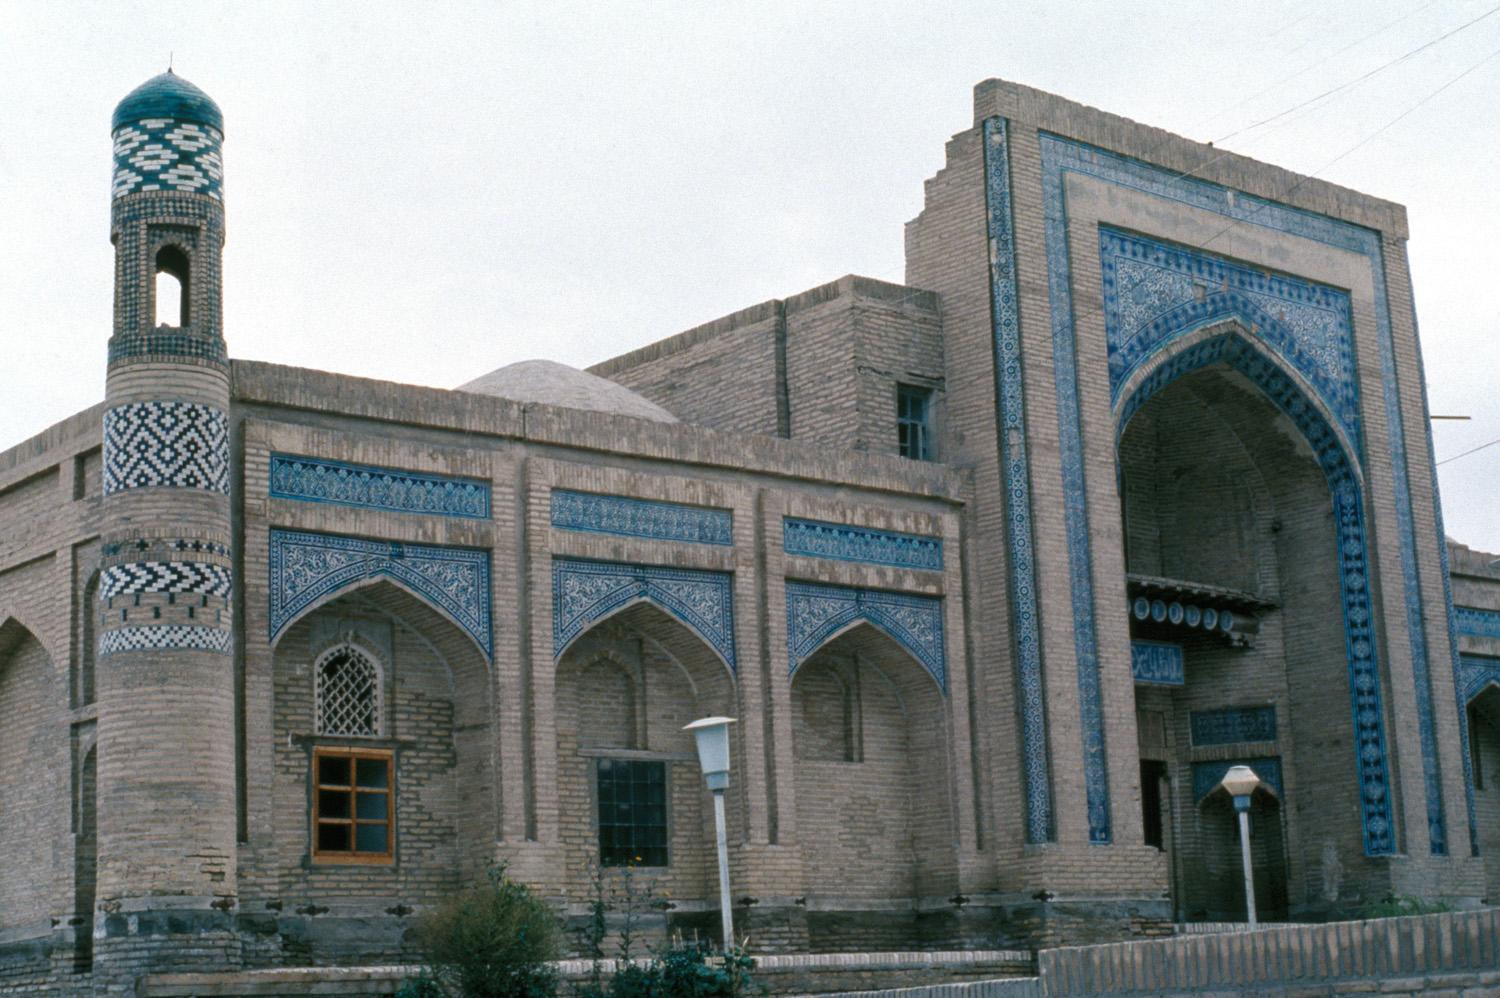 Exterior close-up of façade, pishtaq and corner tower